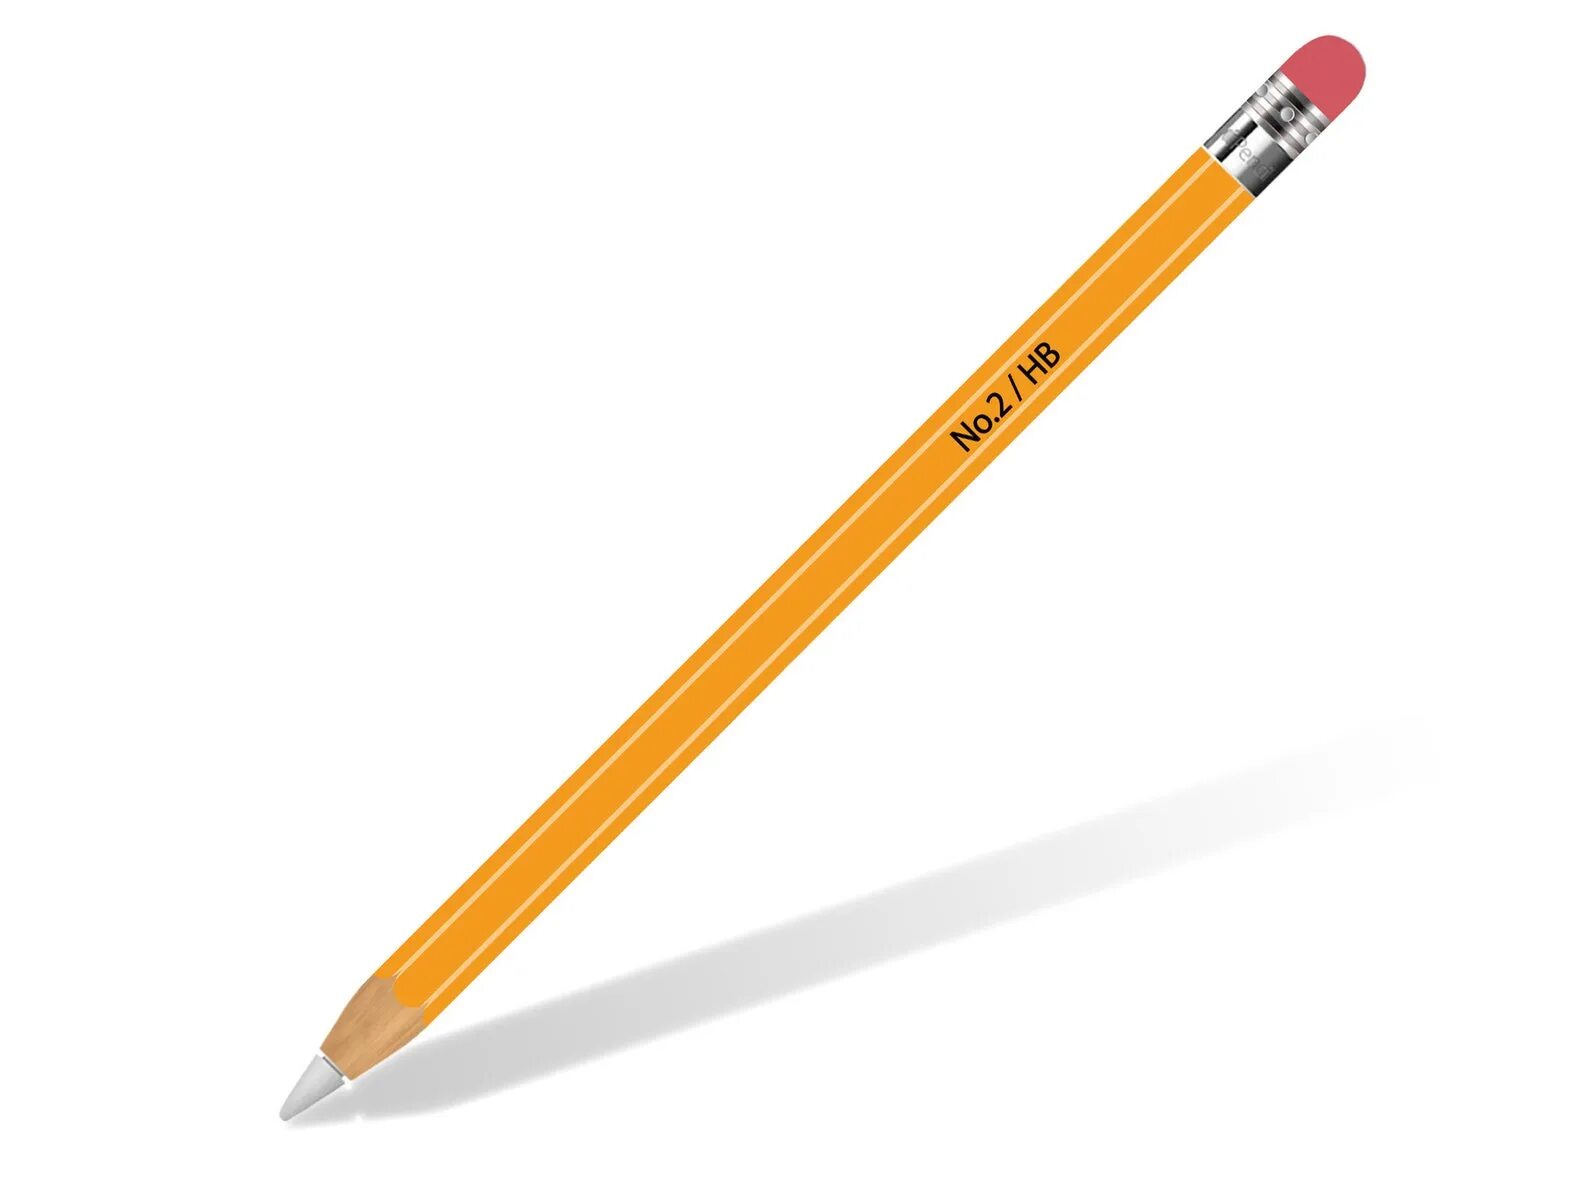 Pencil 2 case. Apple Pencil 3. Стилус Apple Pencil (2nd Generation) для IPAD Pro mu8f2zm/a. Пенсил. Эпл пенсил 3 поколения купить.